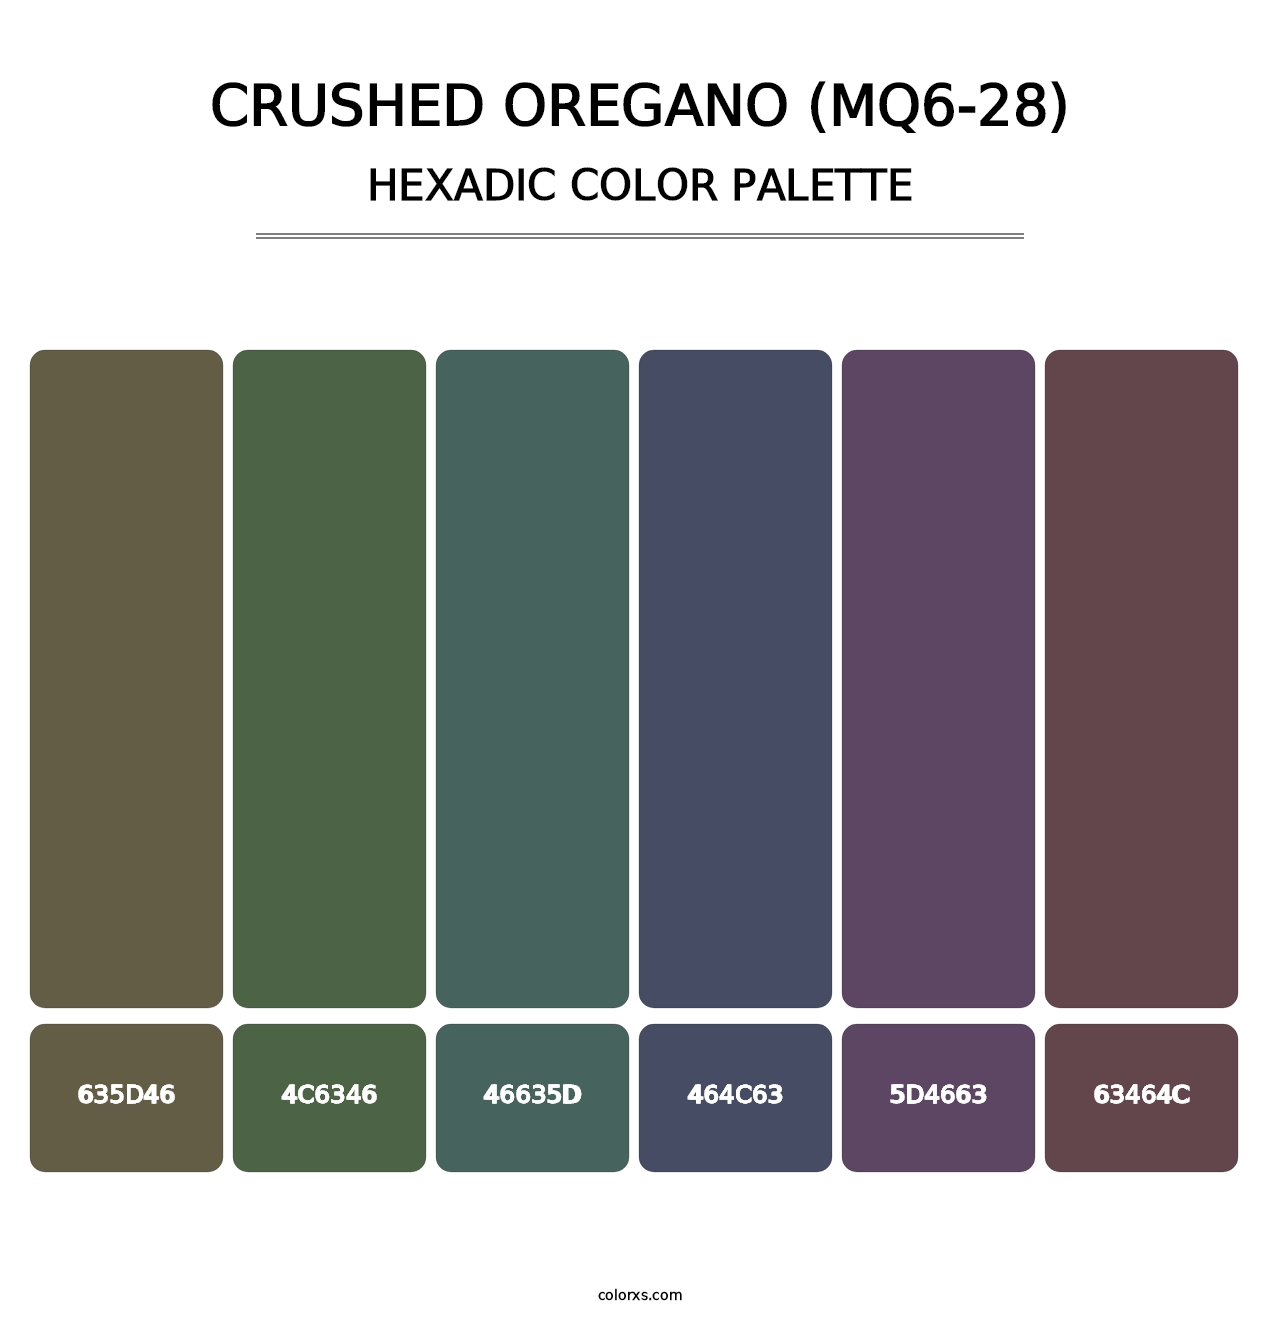 Crushed Oregano (MQ6-28) - Hexadic Color Palette